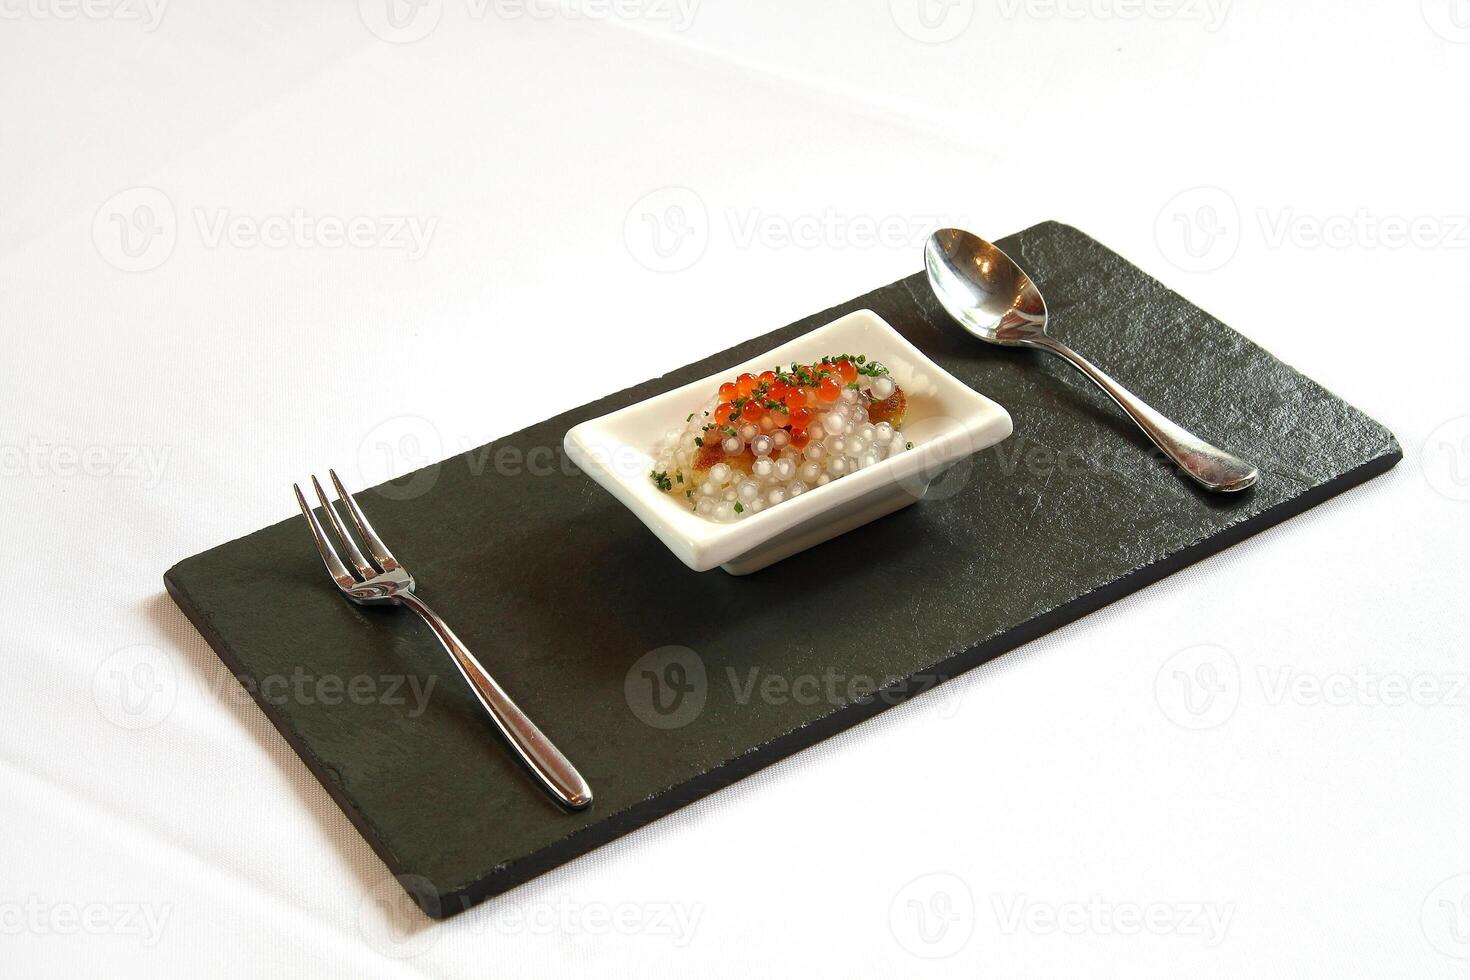 gepaneerd oesters met gemarineerd tapioca foto